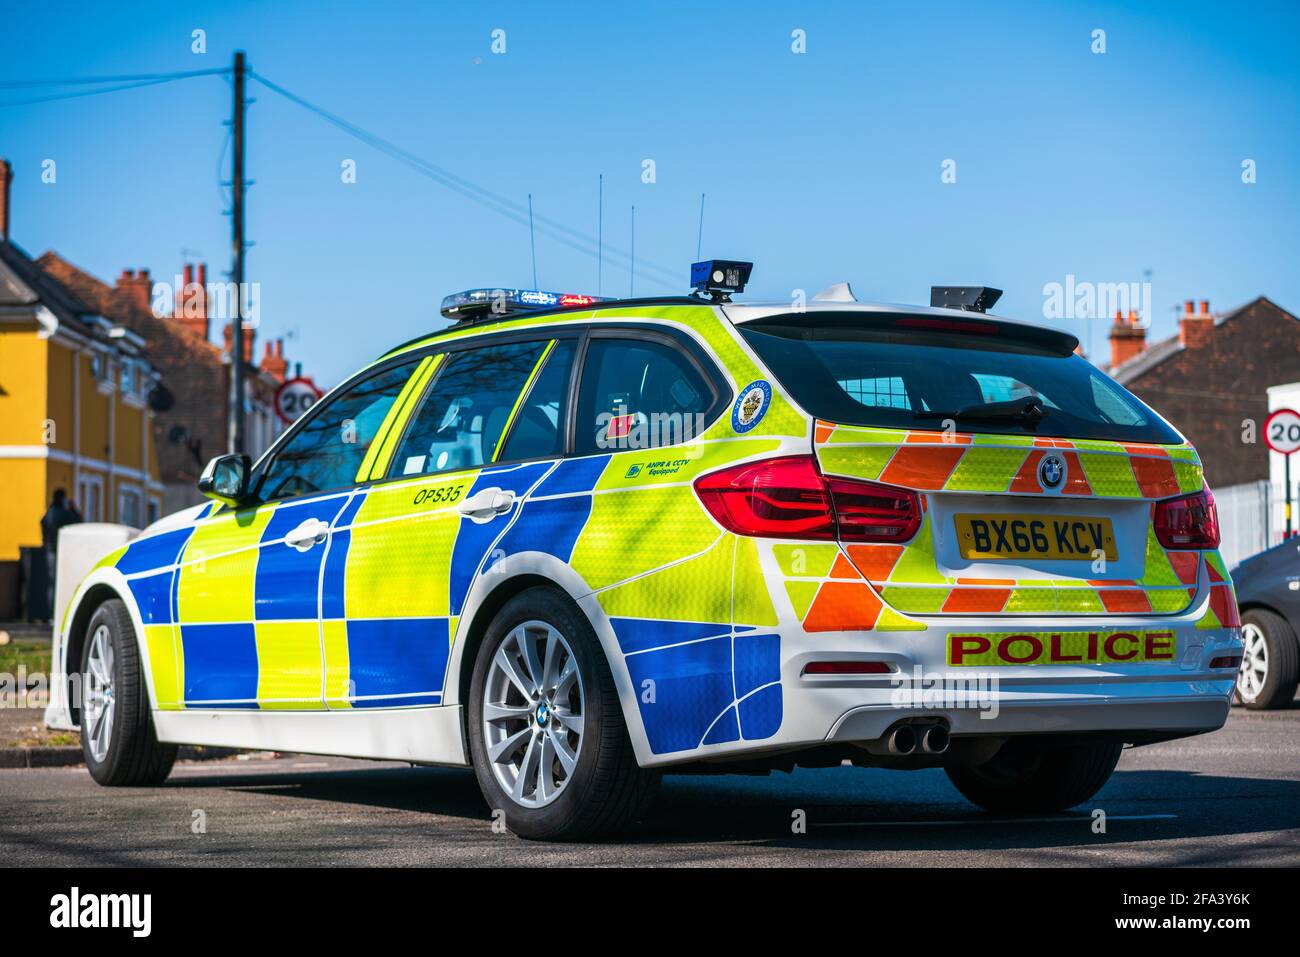 BMW Police Car UK, West Midlands Police, Uk Cop car, Traffic police Stock Photo